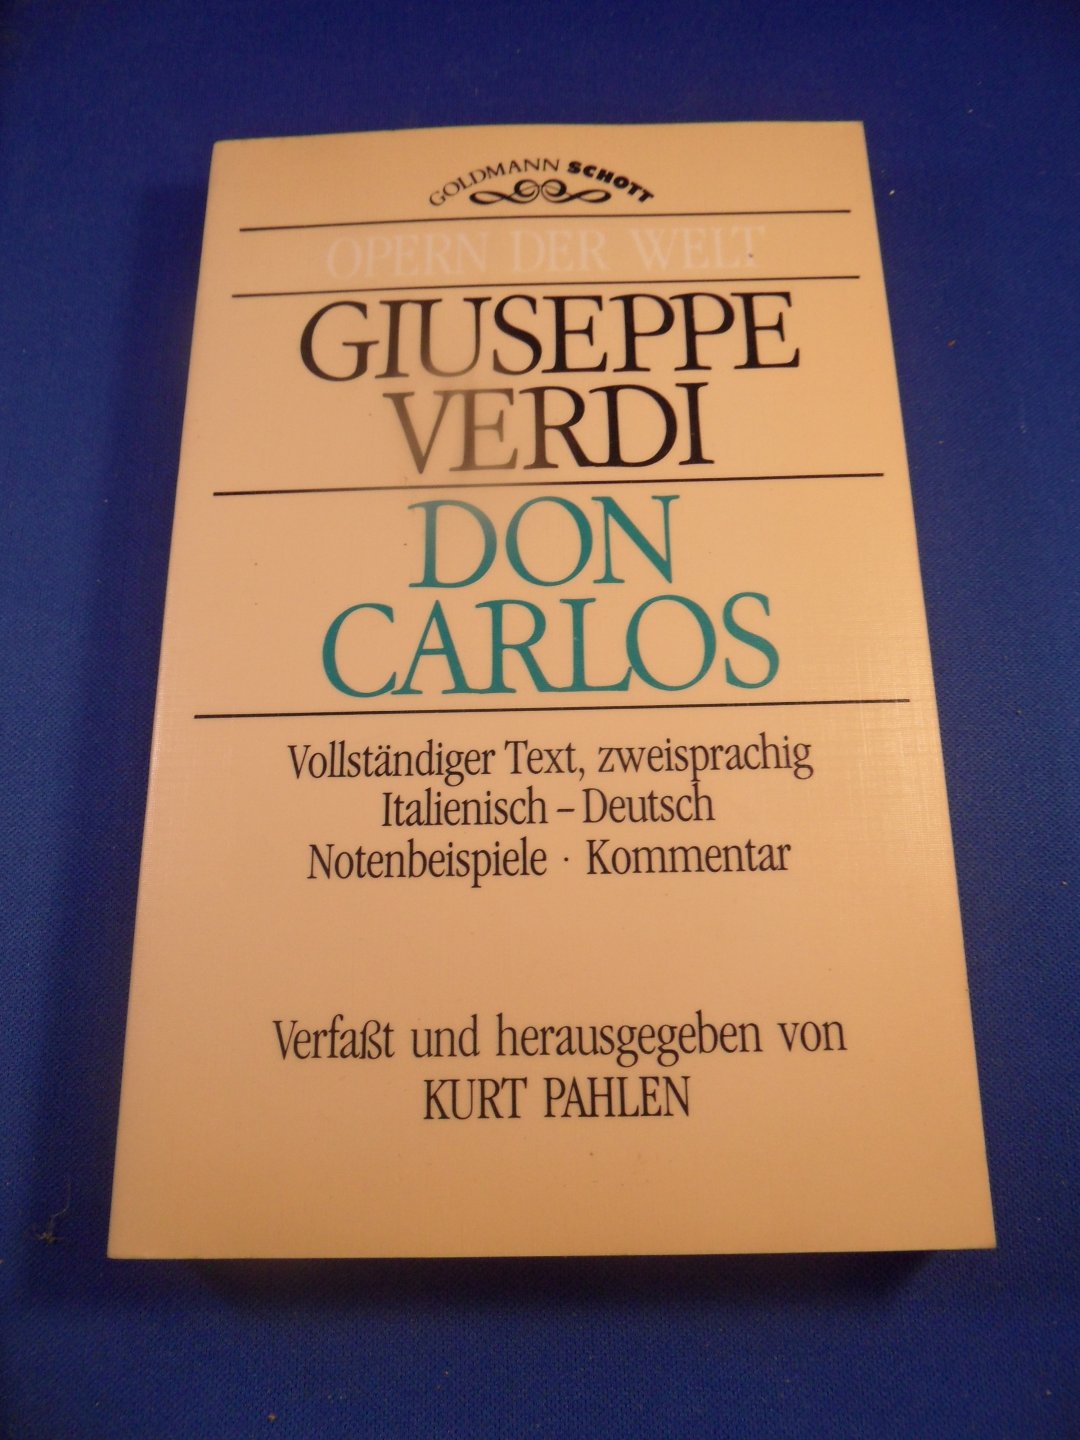 Verdi, G. - Don Carlos